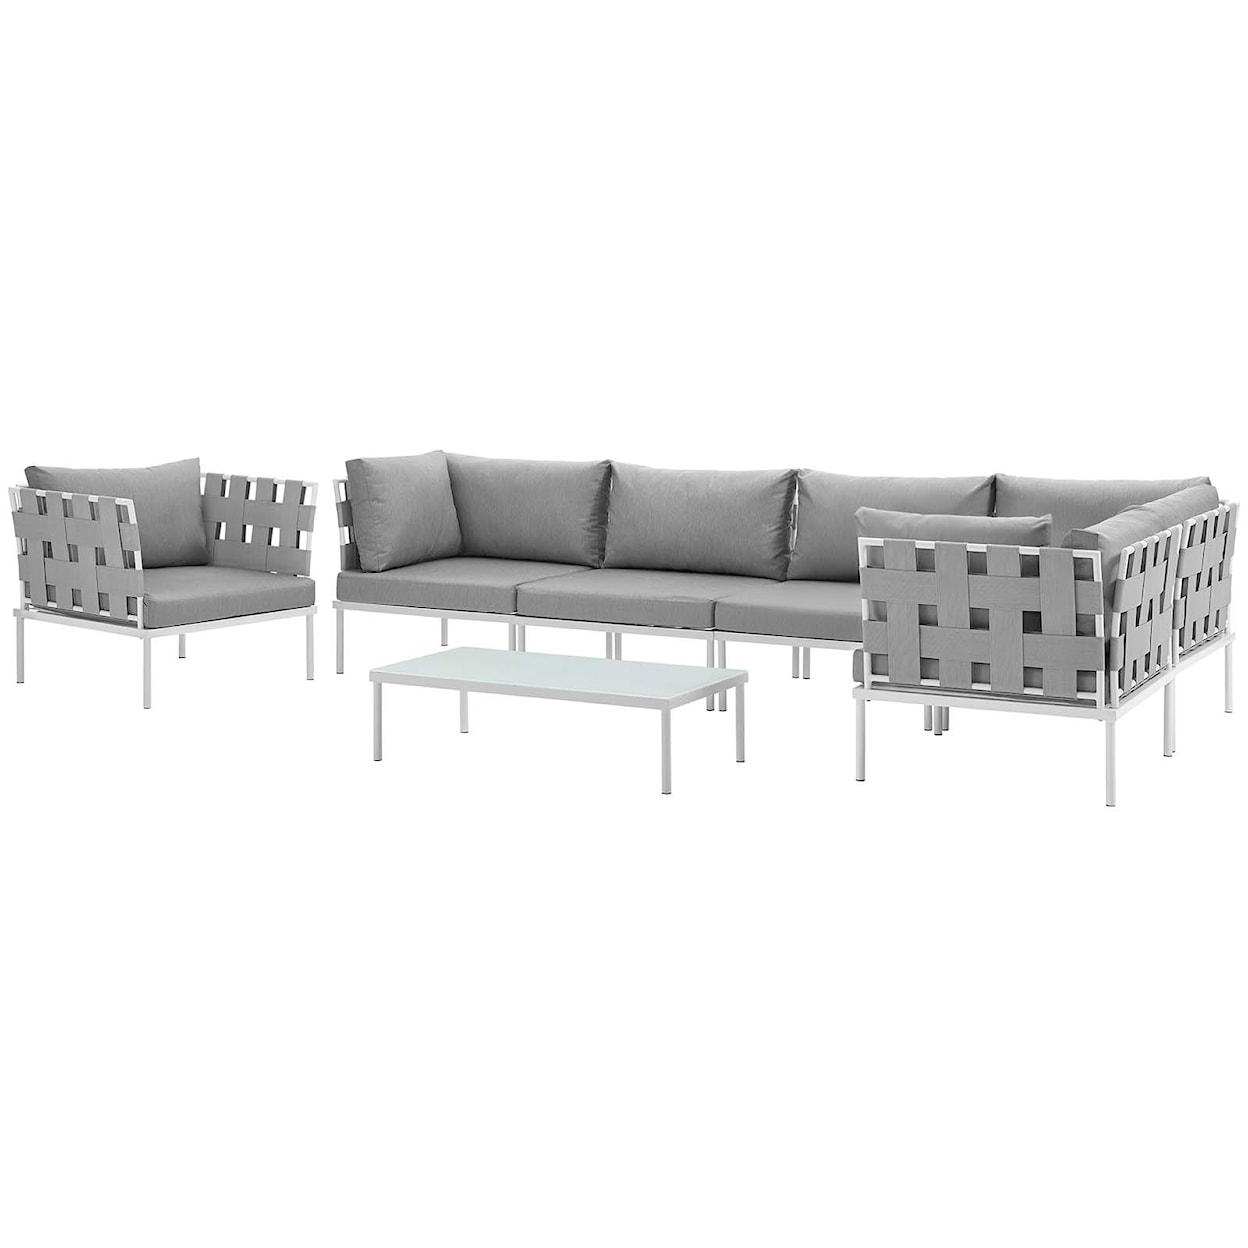 Modway Harmony Outdoor 7 Piece Sectional Sofa Set